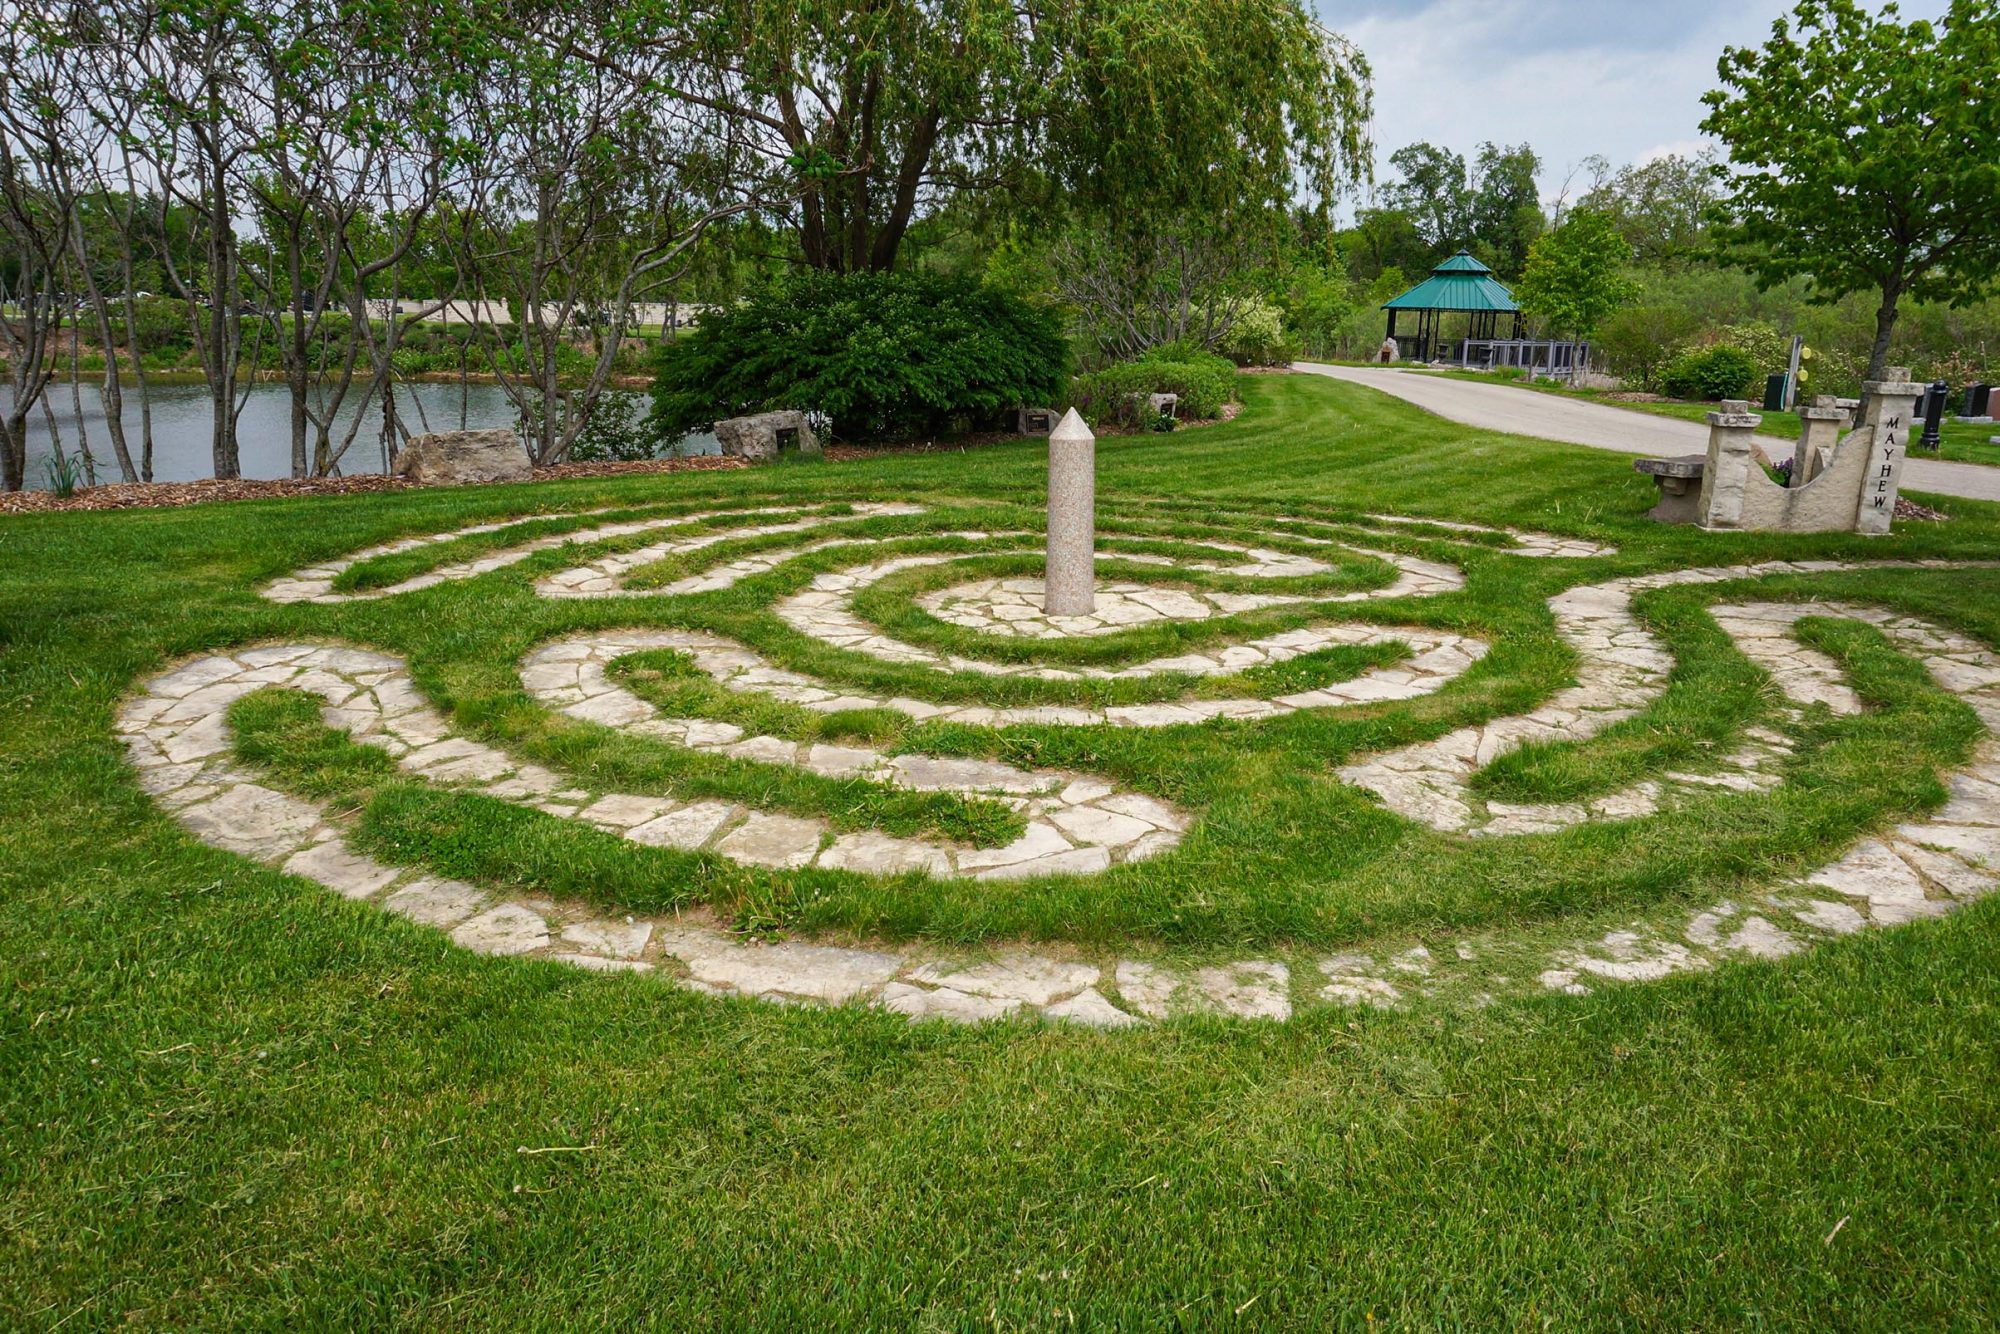 Labyrinth paving among green grass.